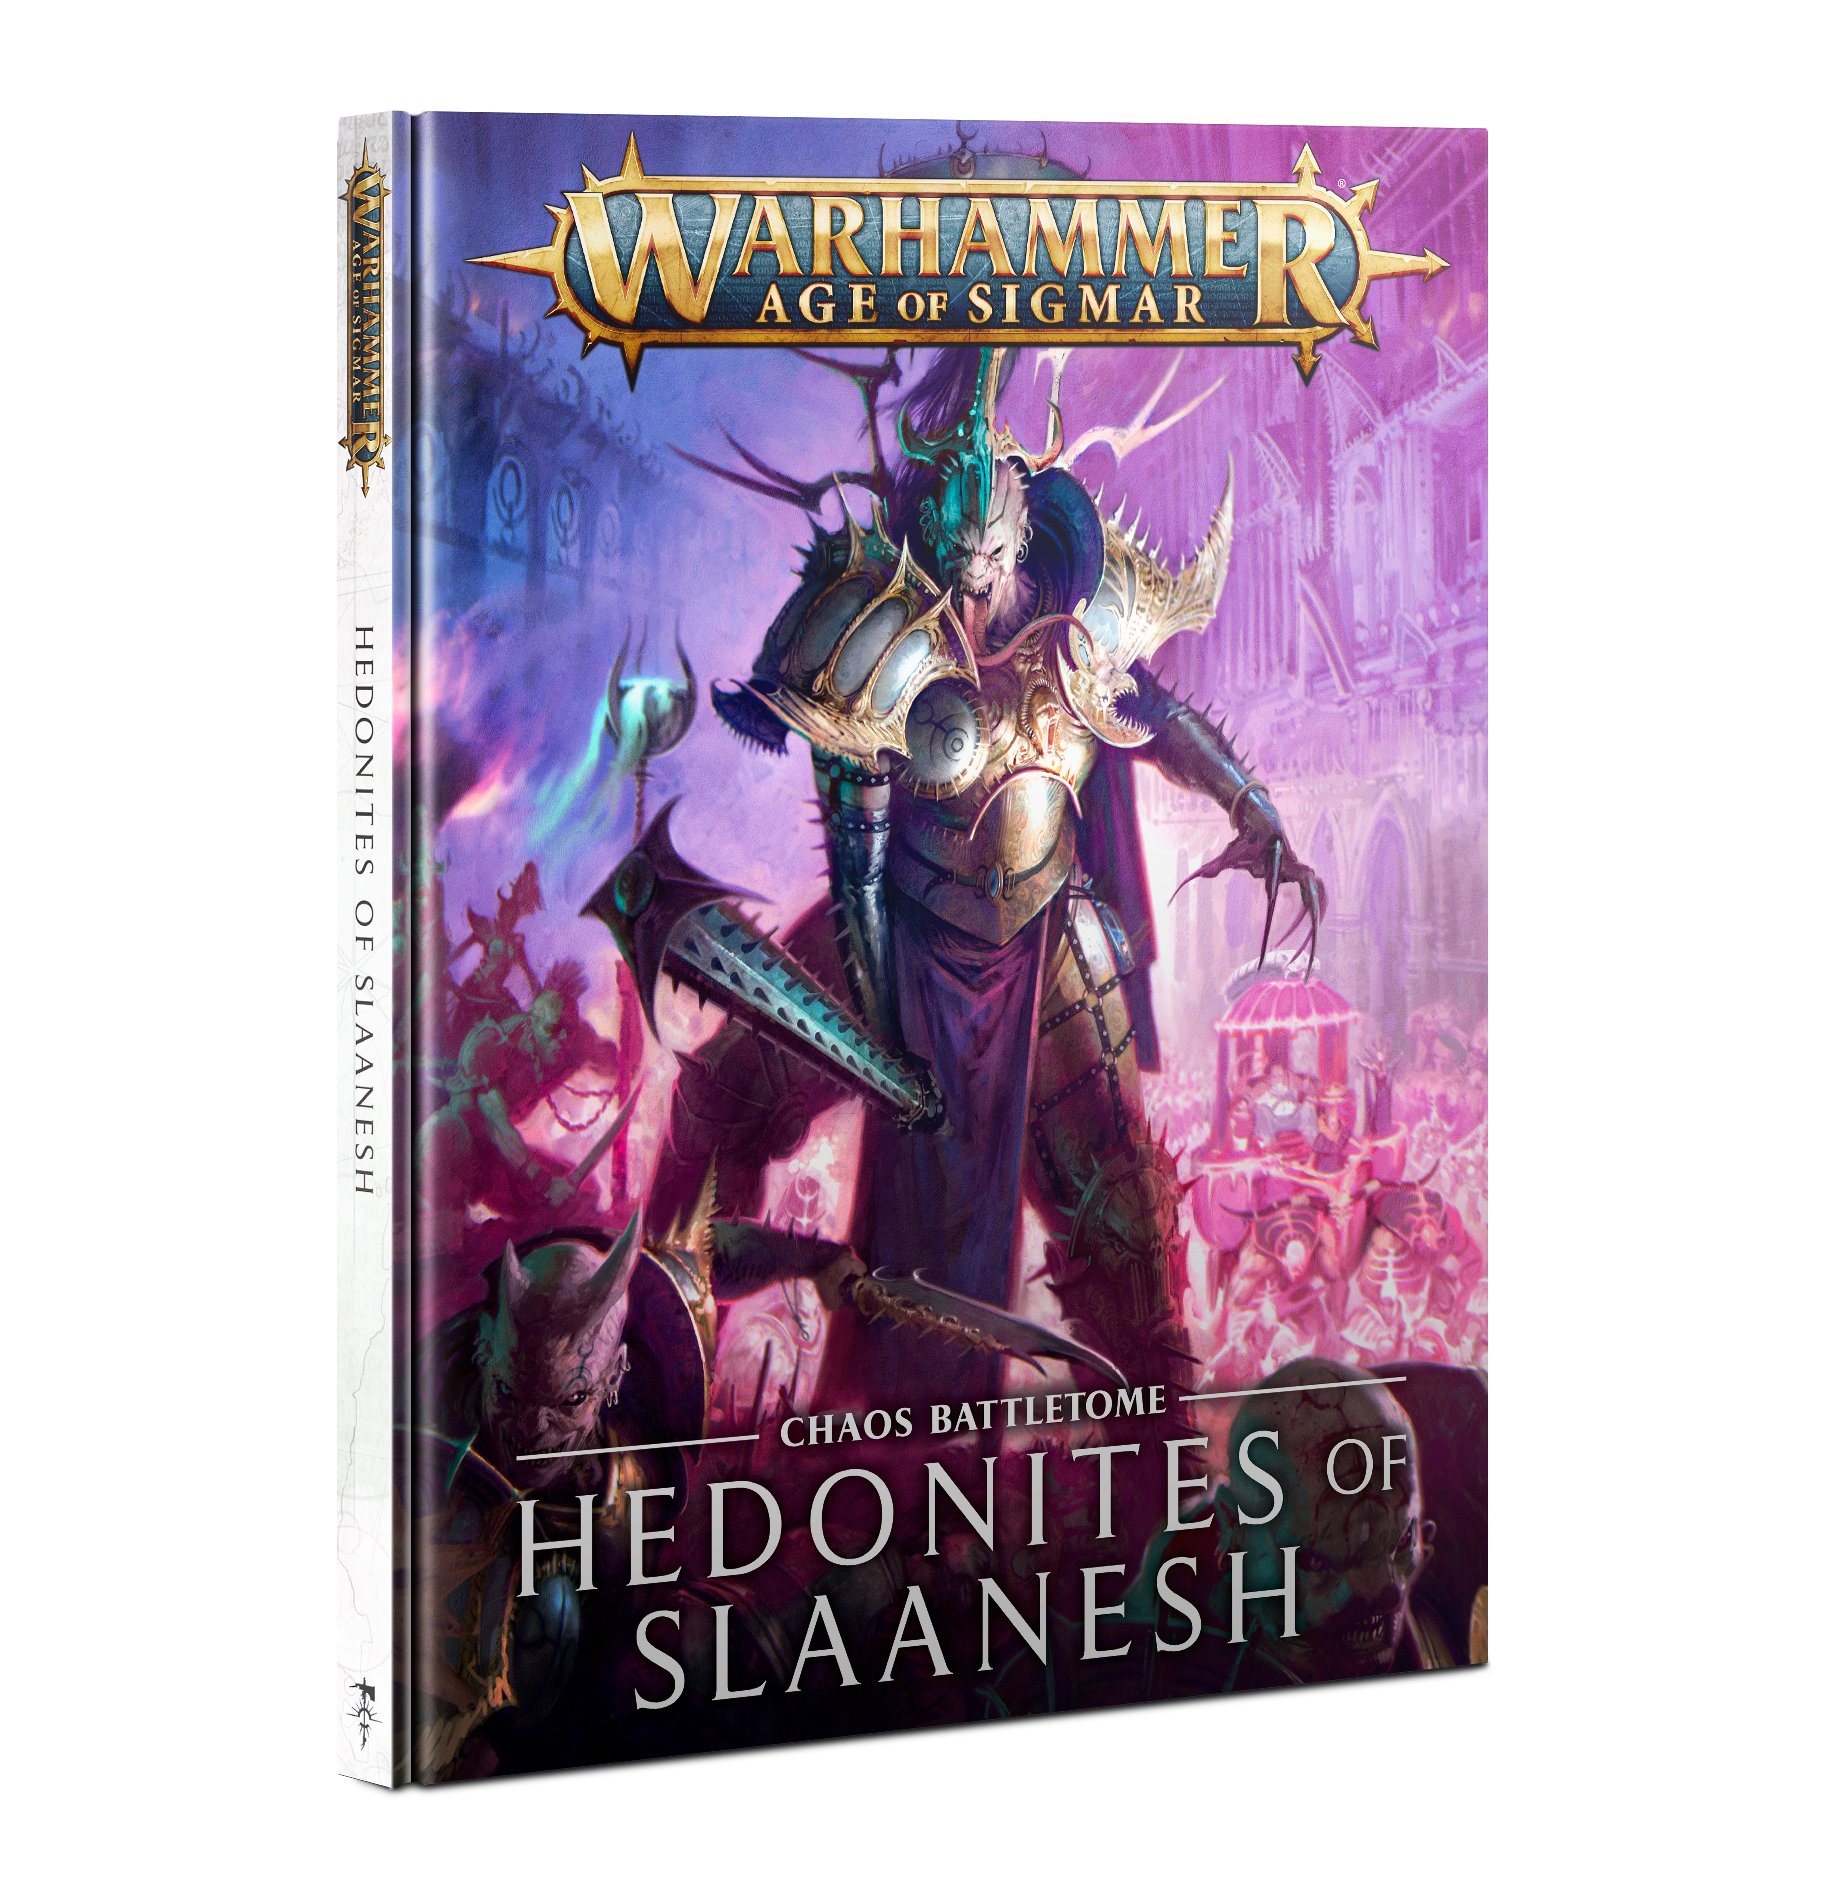 Warhammer Age of Sigmar: Battletome: Hedonites of Slaanesh (2021 HB) 